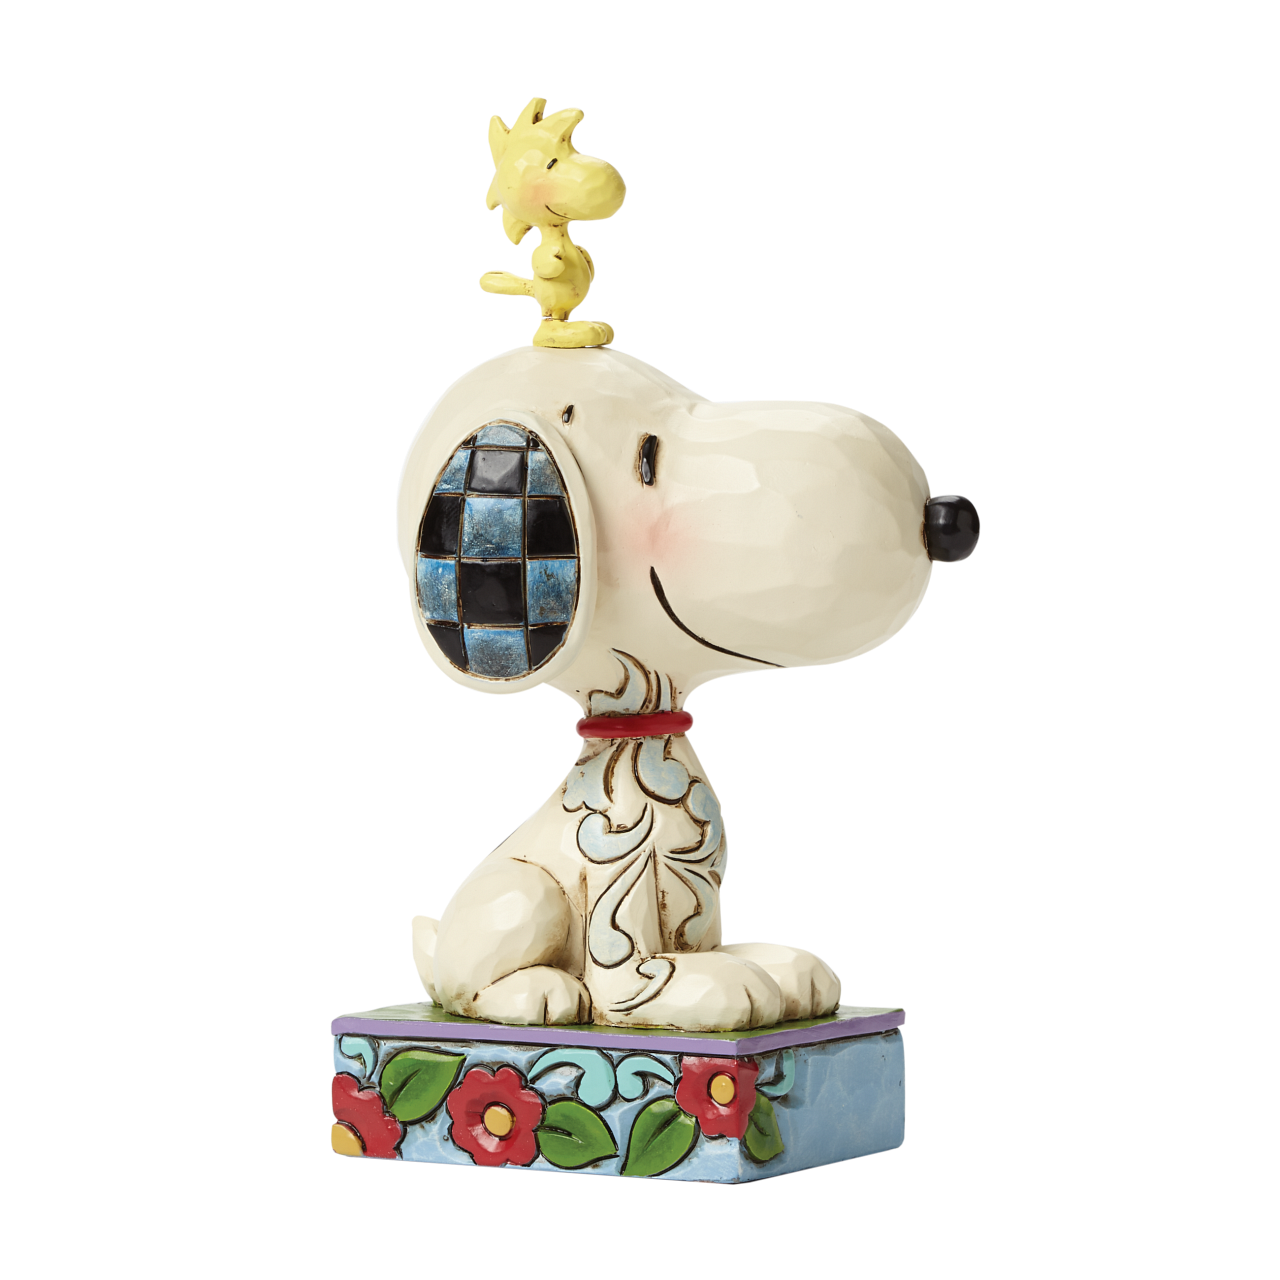 My Best Friend (Snoopy & Woodstock Personality Pose)